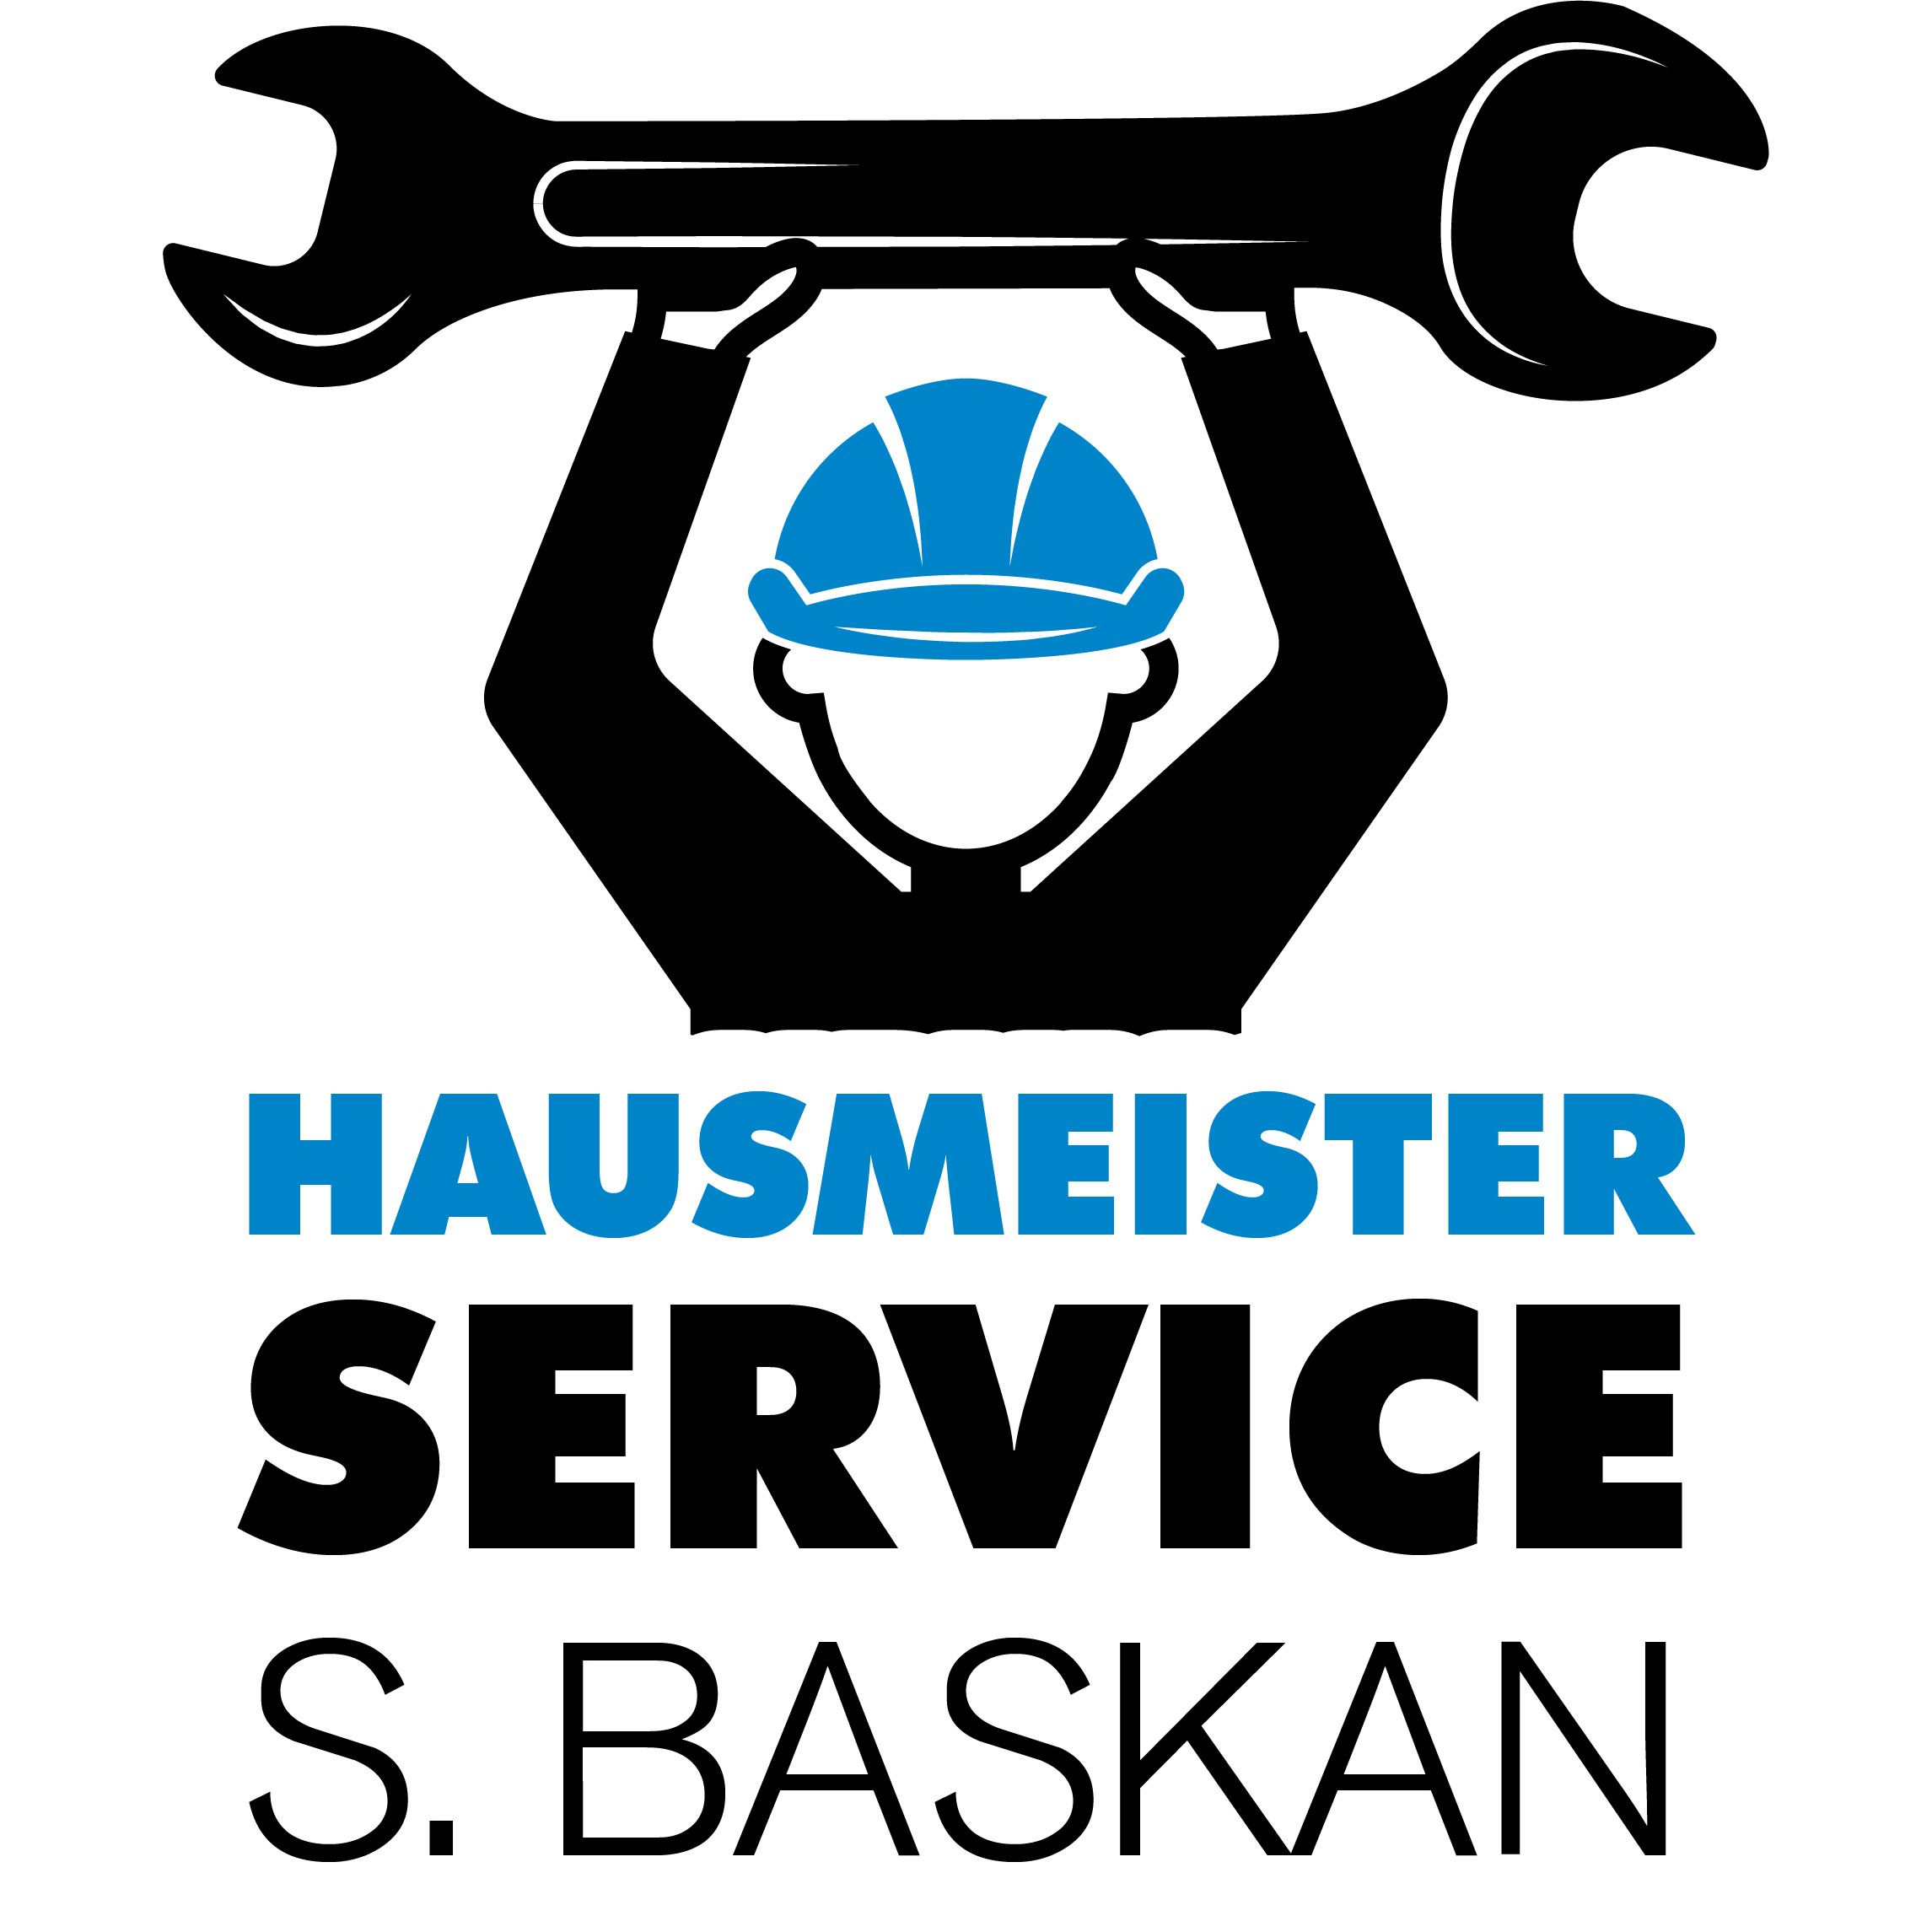 Hausmeister Service S. Baskan